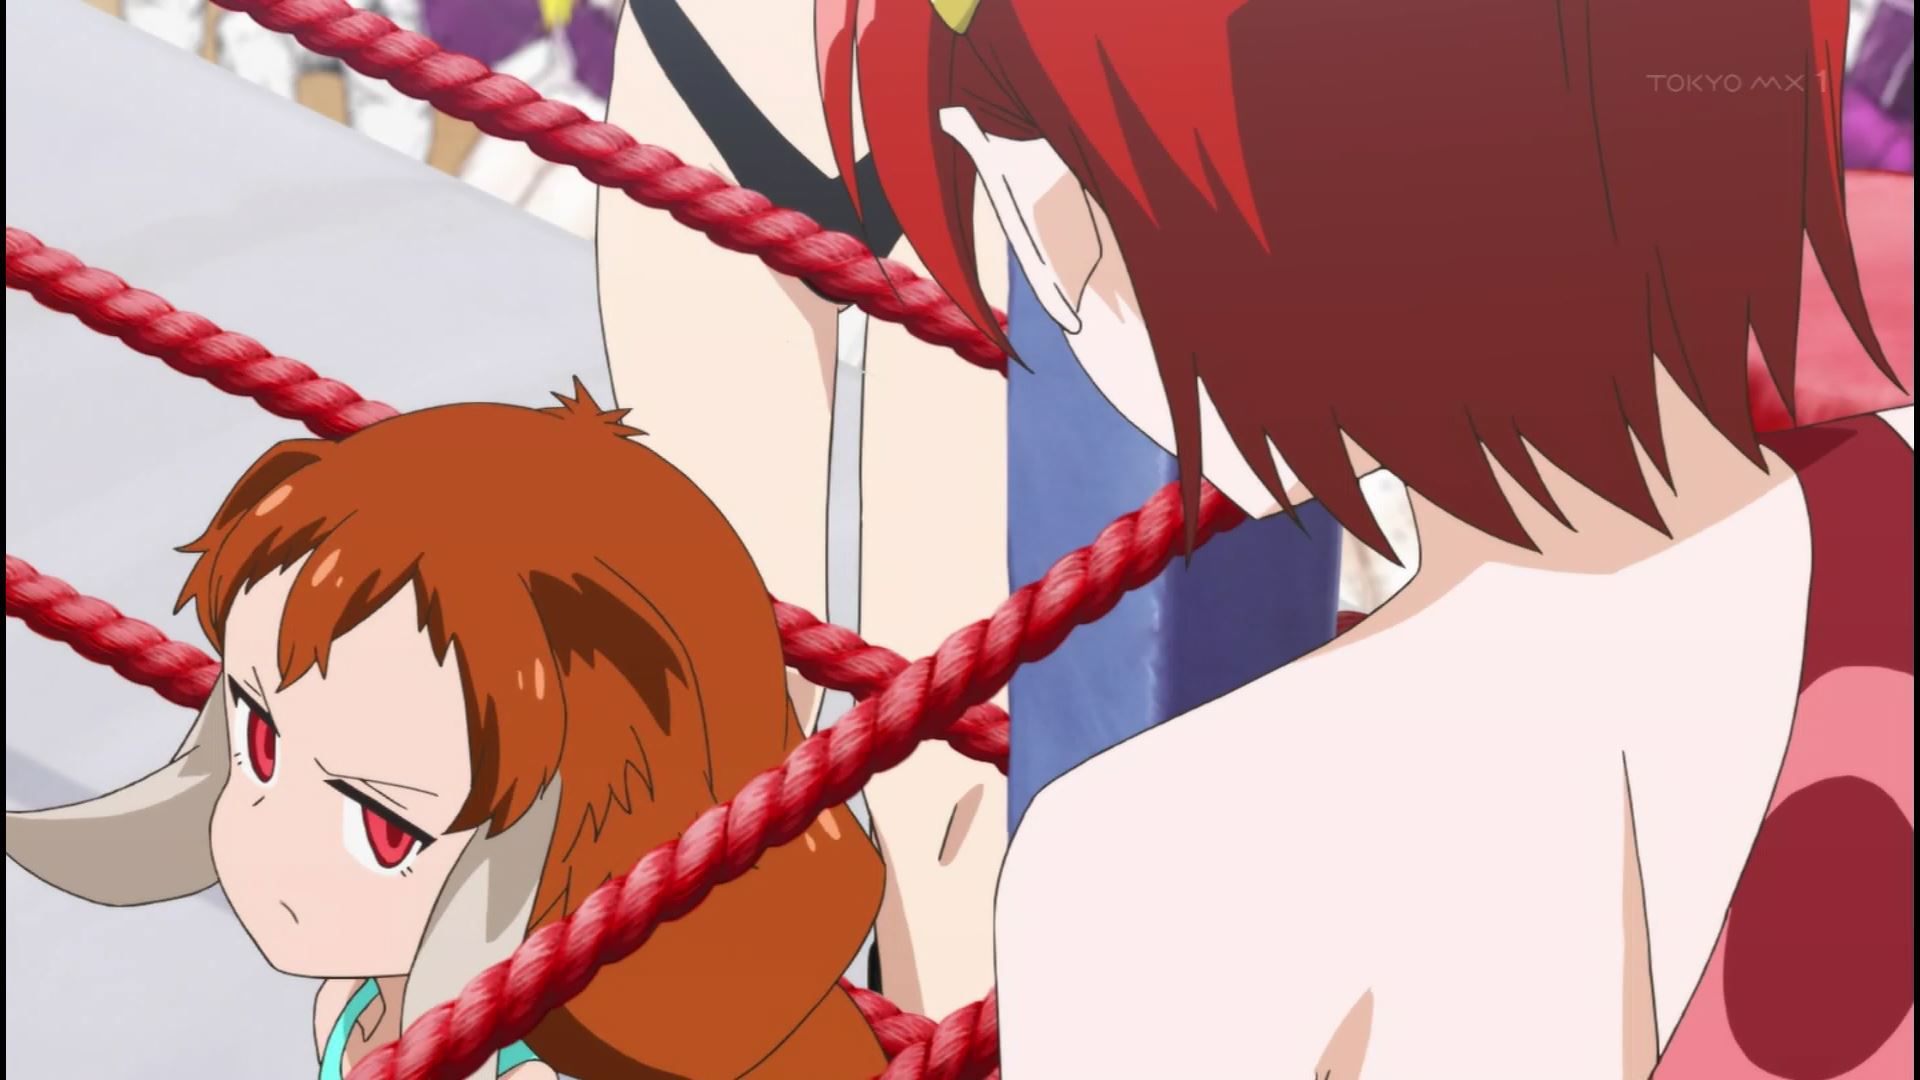 Anime [Shimarenuse] Seaton Gakuen] scene that girls become insanely erotic costumes in episode 12 17